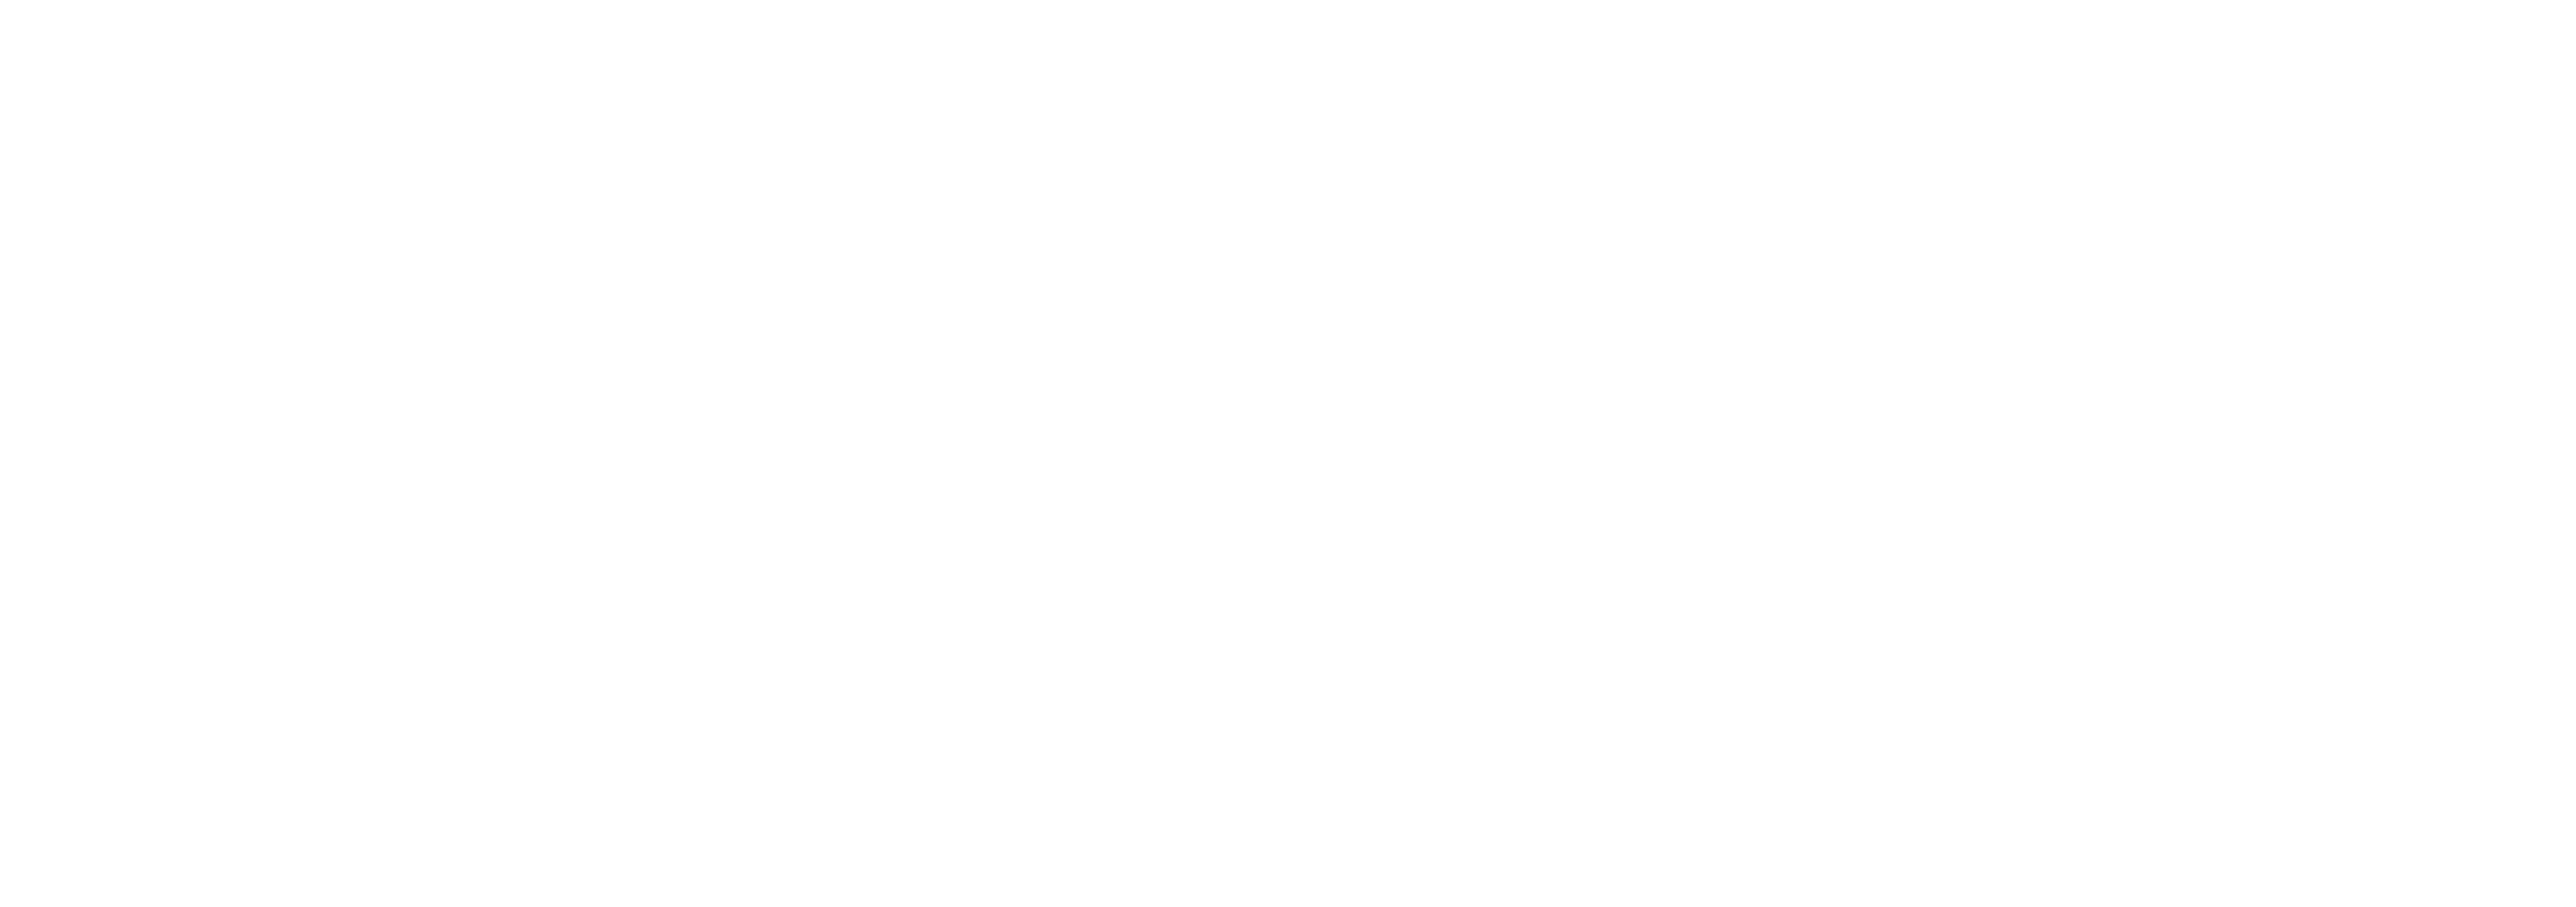 LEGO DC Comics Super Heroes: Justice League - Attack of the Legion of Doom! logo